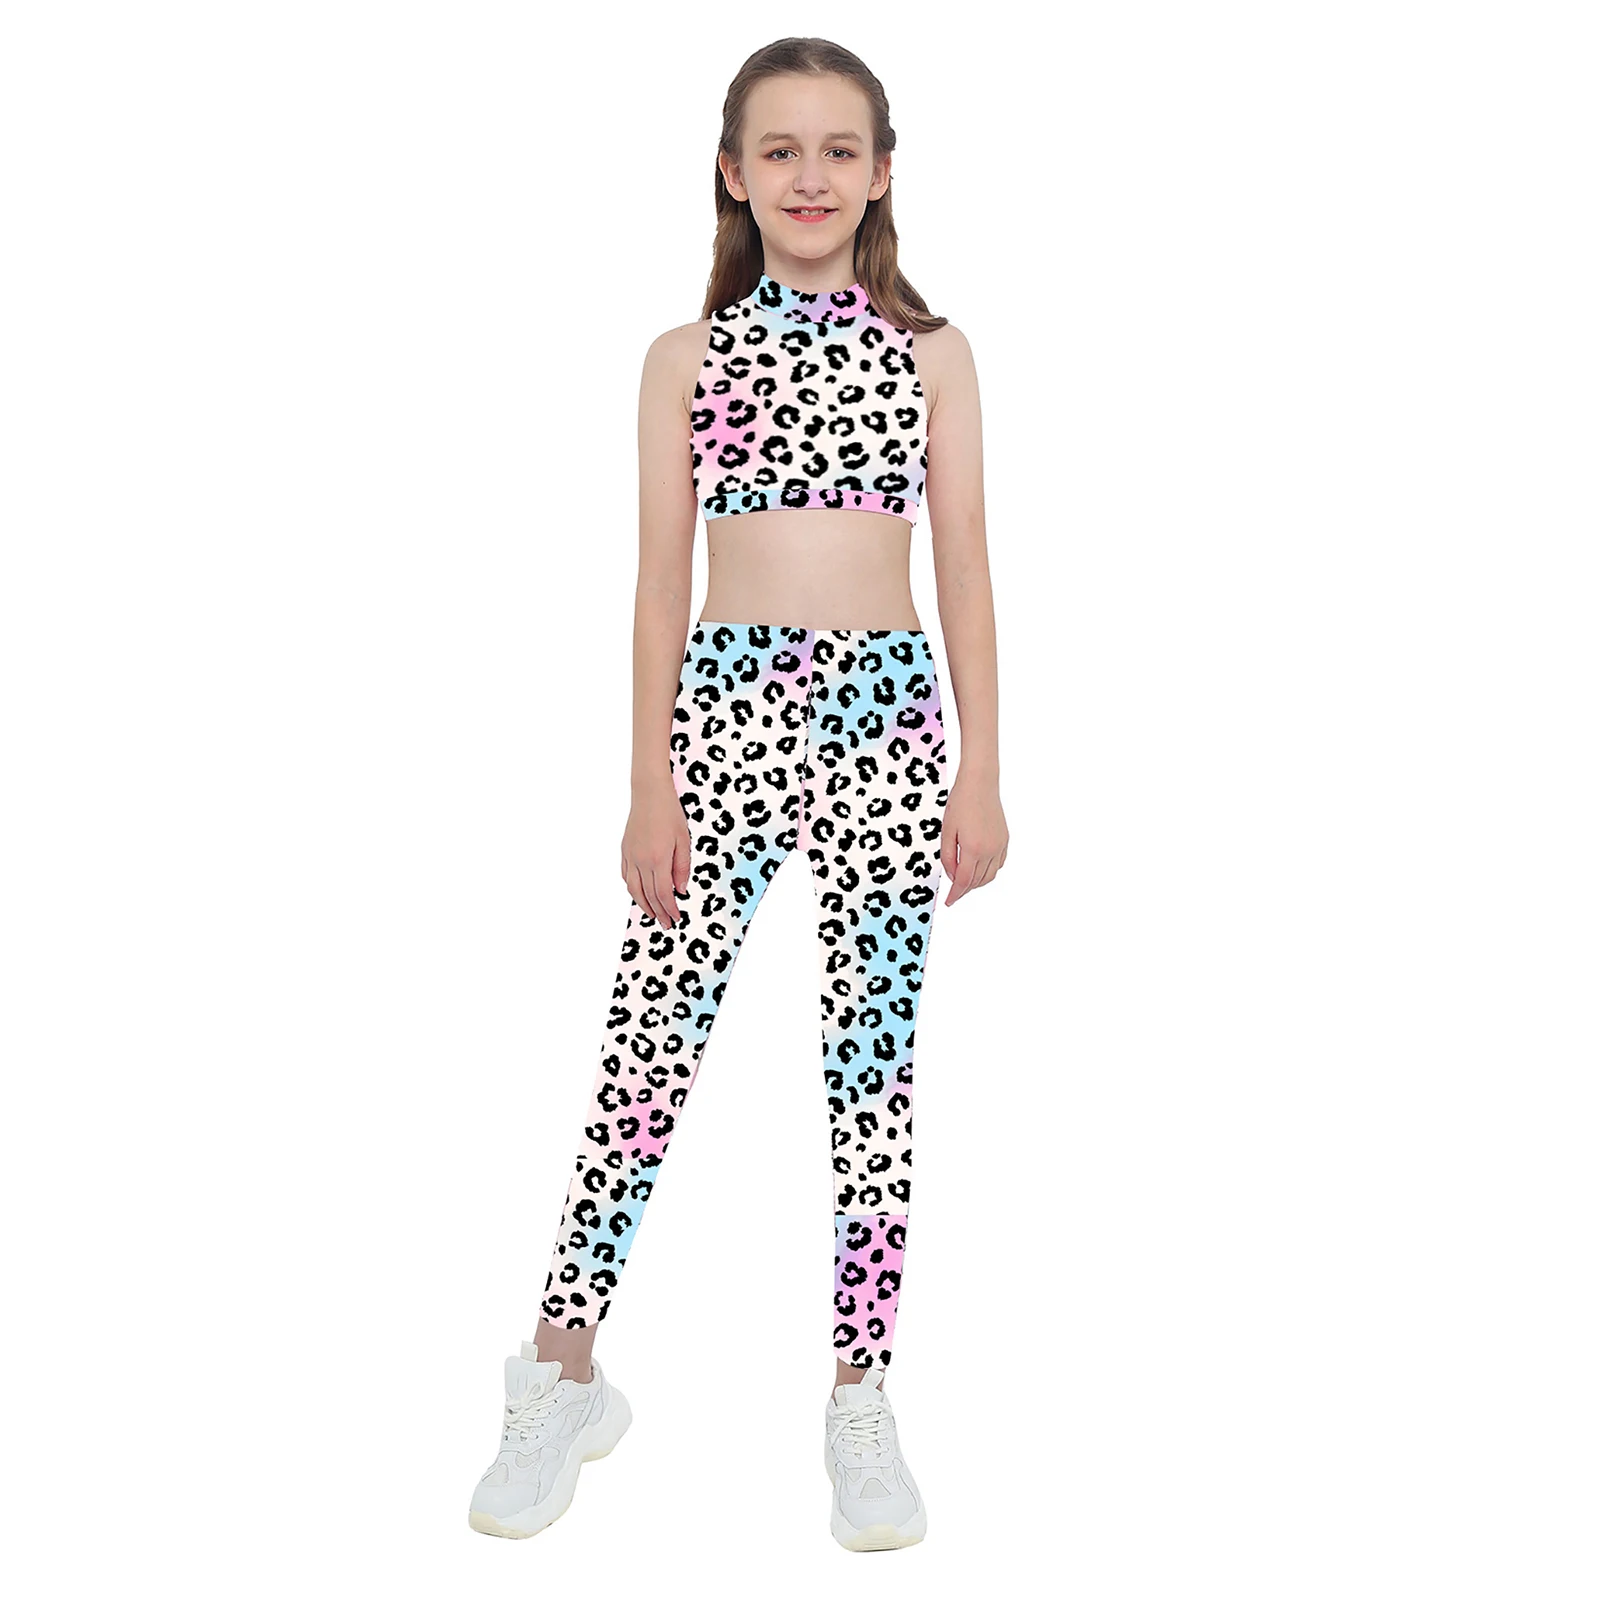 Zaldita Kids Girls 2 Pcs Sport Gymnastics Dance Outfits Sleeveless Tanks Crop Top with Leggings Tracksuit Set Activewear 